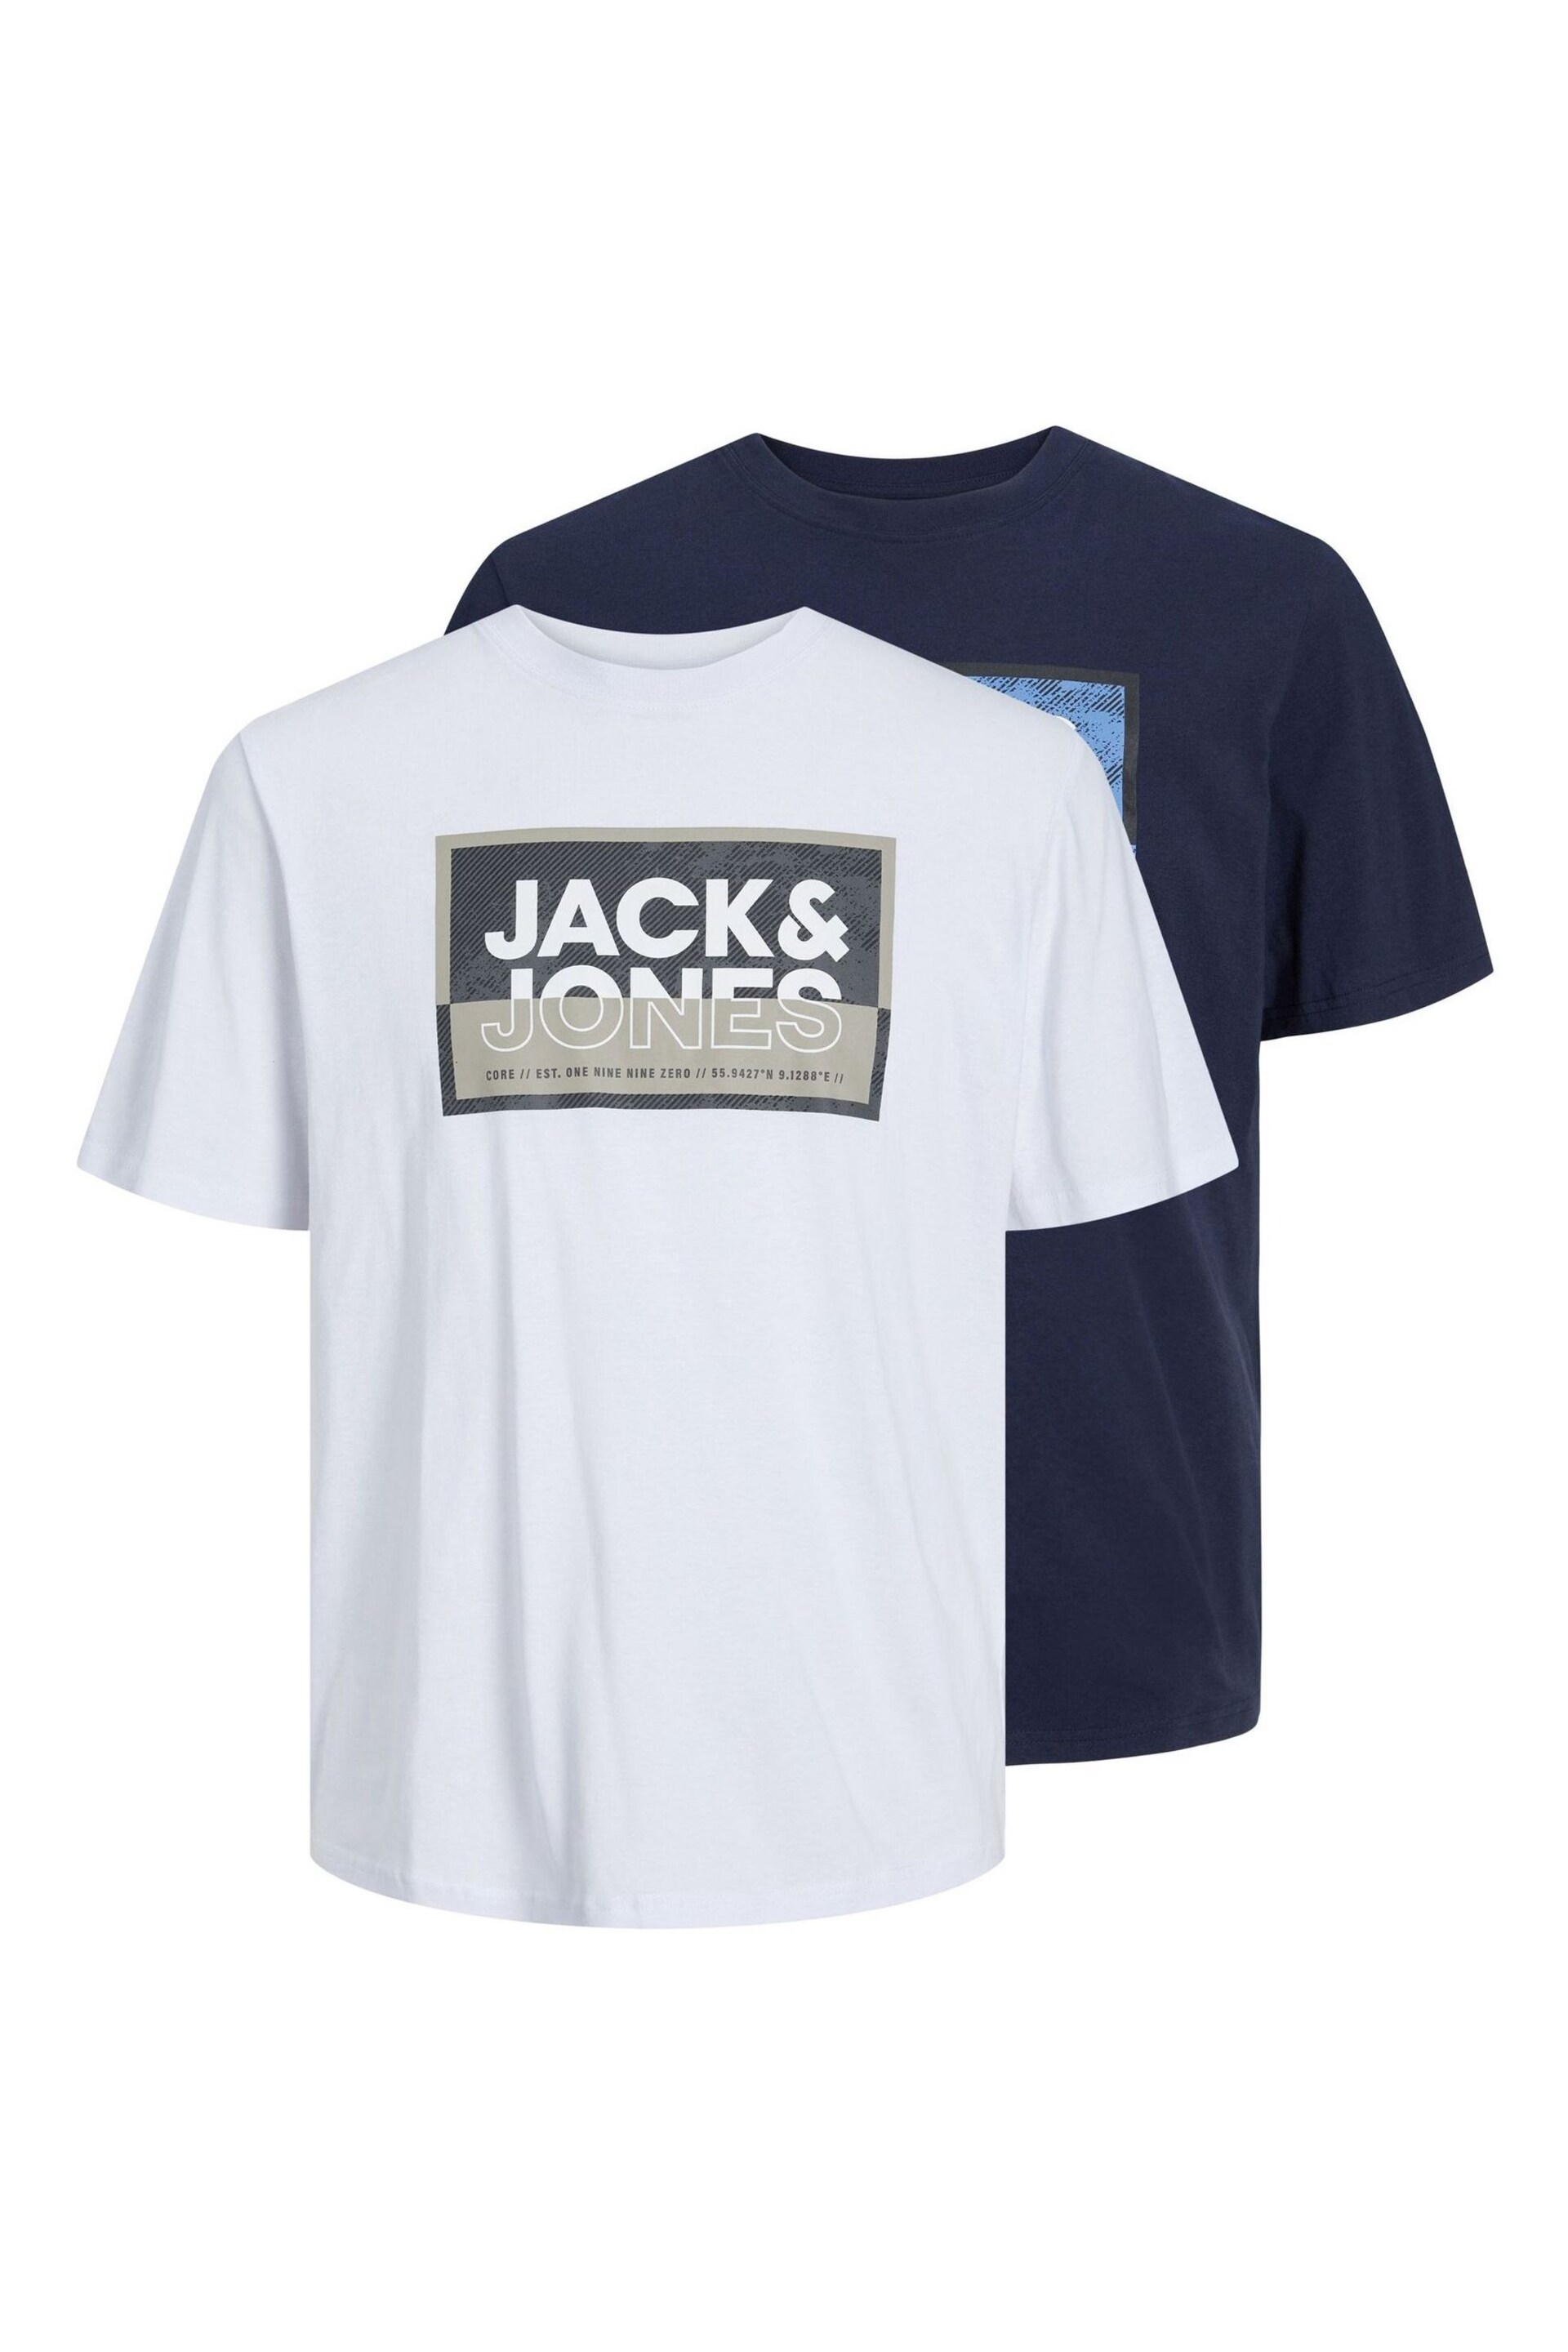 JACK & JONES JUNIOR Blue Crew Neck T-Shirts Pack - Image 1 of 3